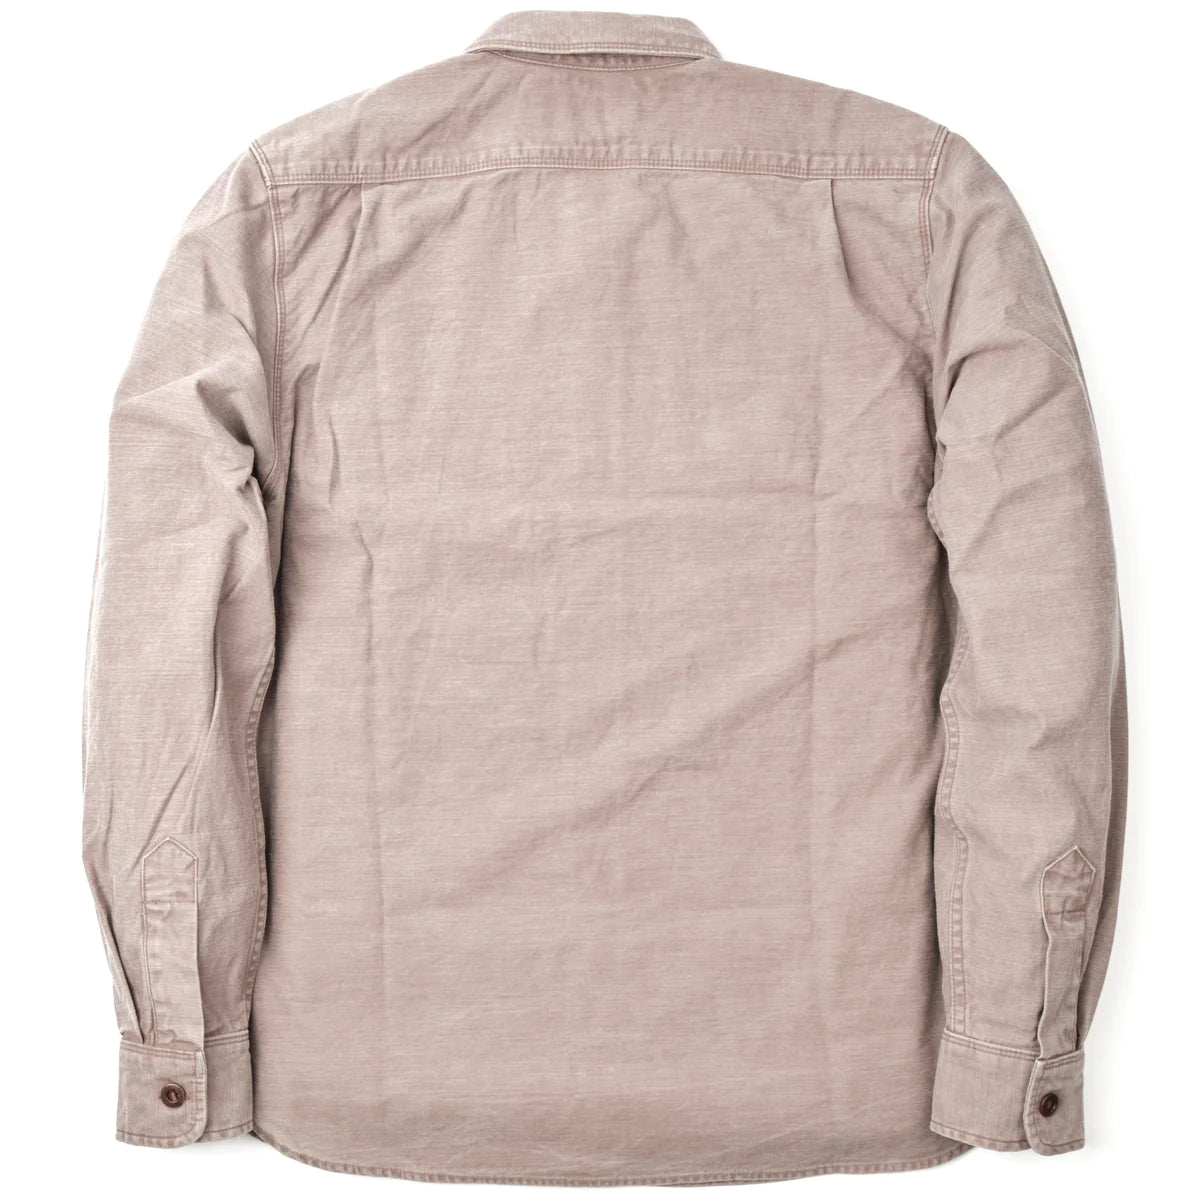 Freenote Cloth Utility Light Shirt - Grey